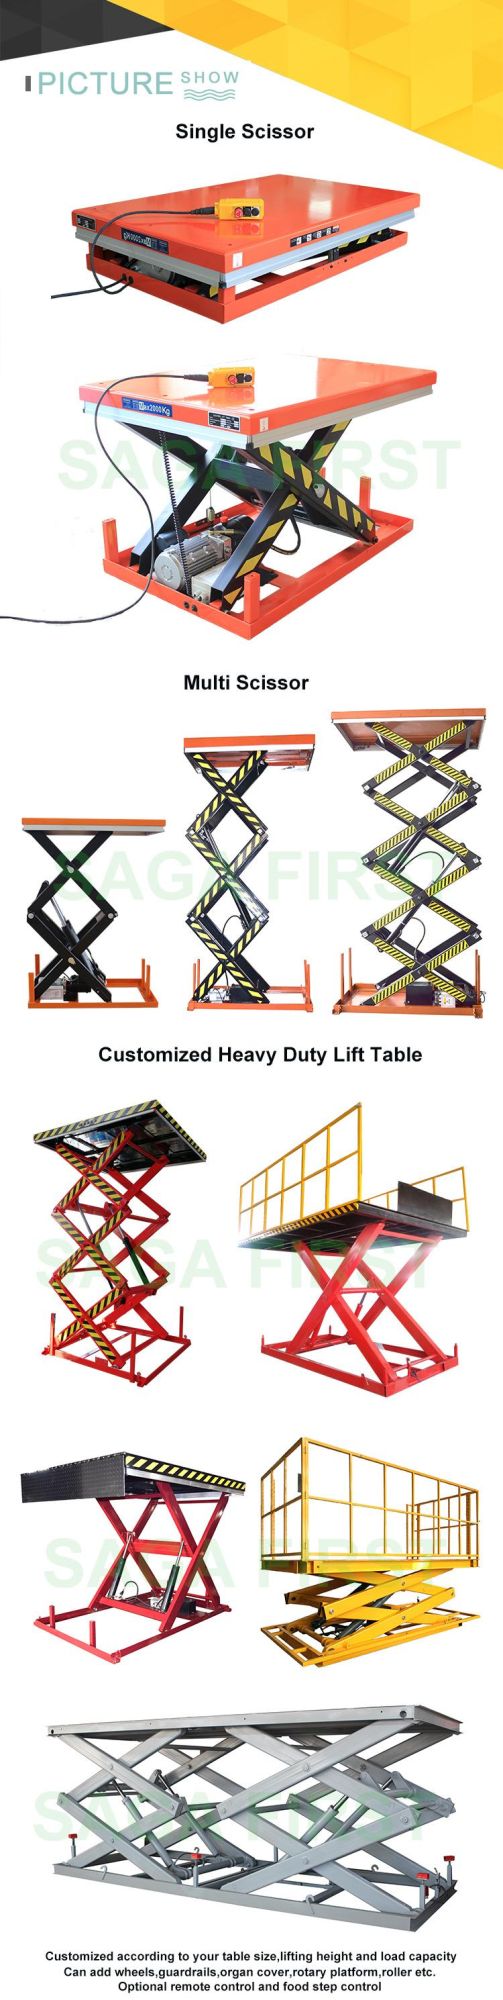 Popular Lifting Equipment Stationary Hydraulic Electric Scissor Lifts Platform